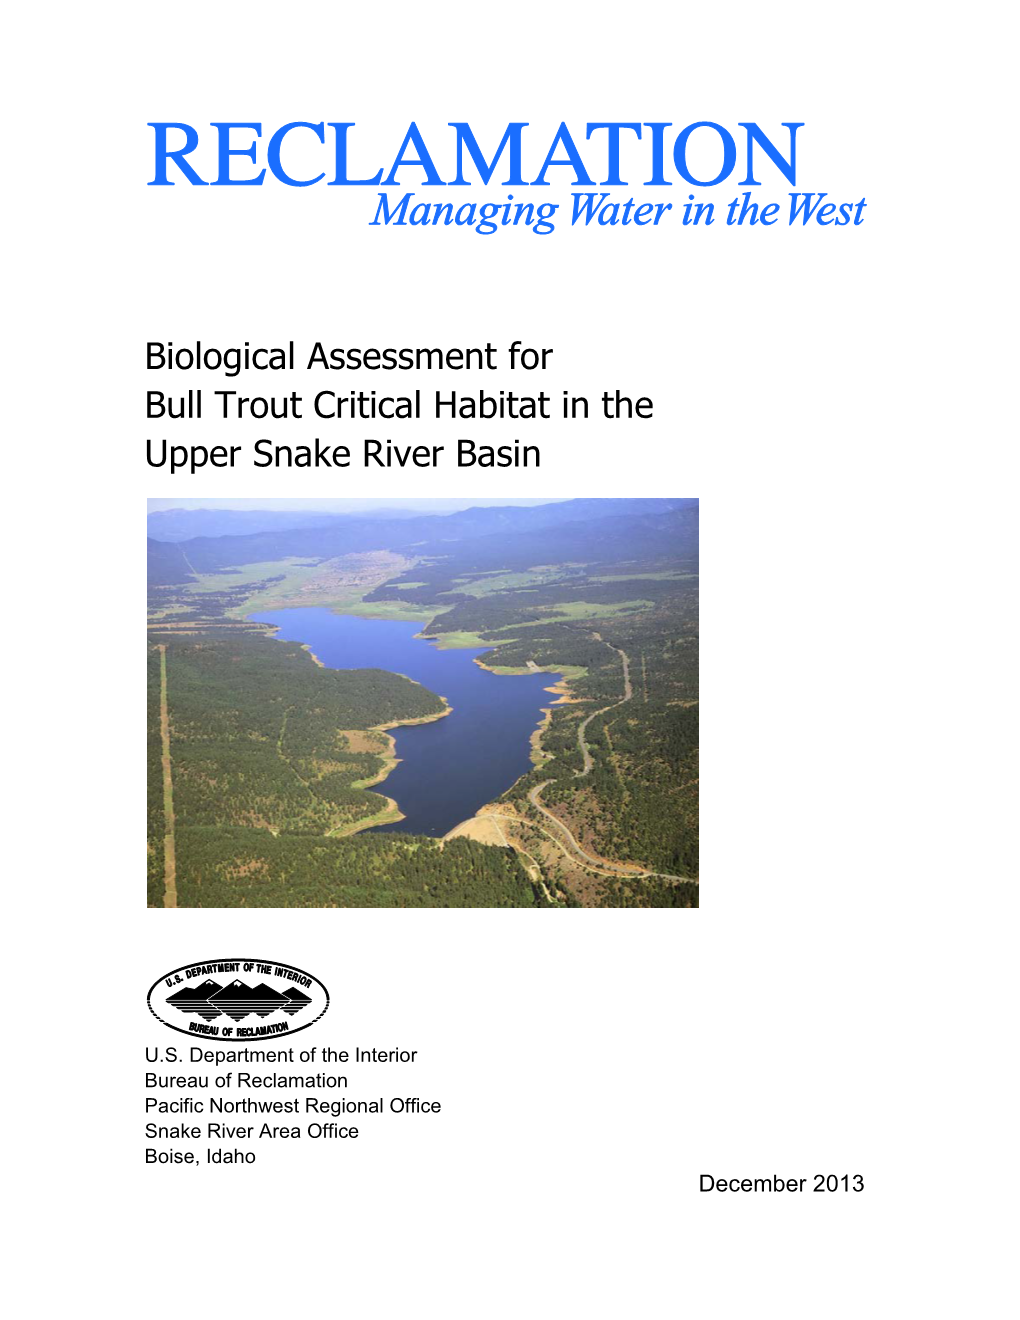 Biological Assessment for Bull Trout Critical Habitat in the Upper Snake River Basin